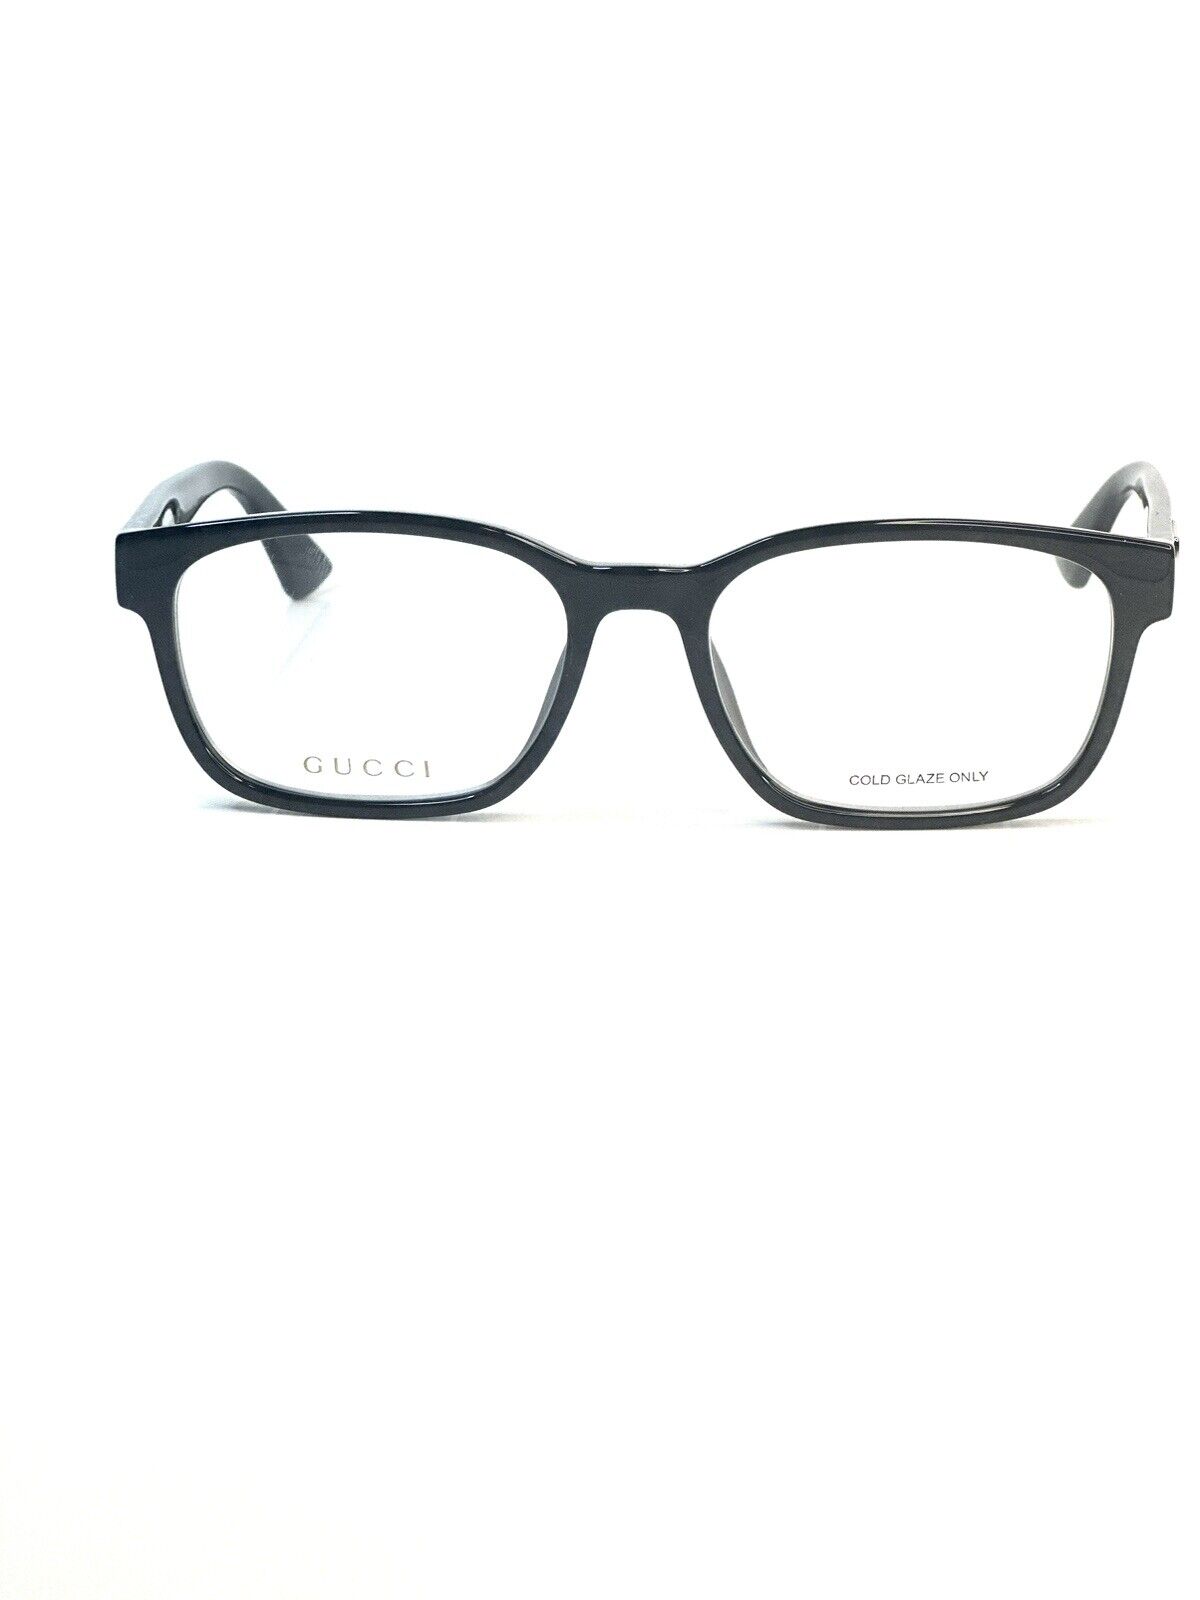 Gucci GG0749o-004 55mm New Eyeglasses